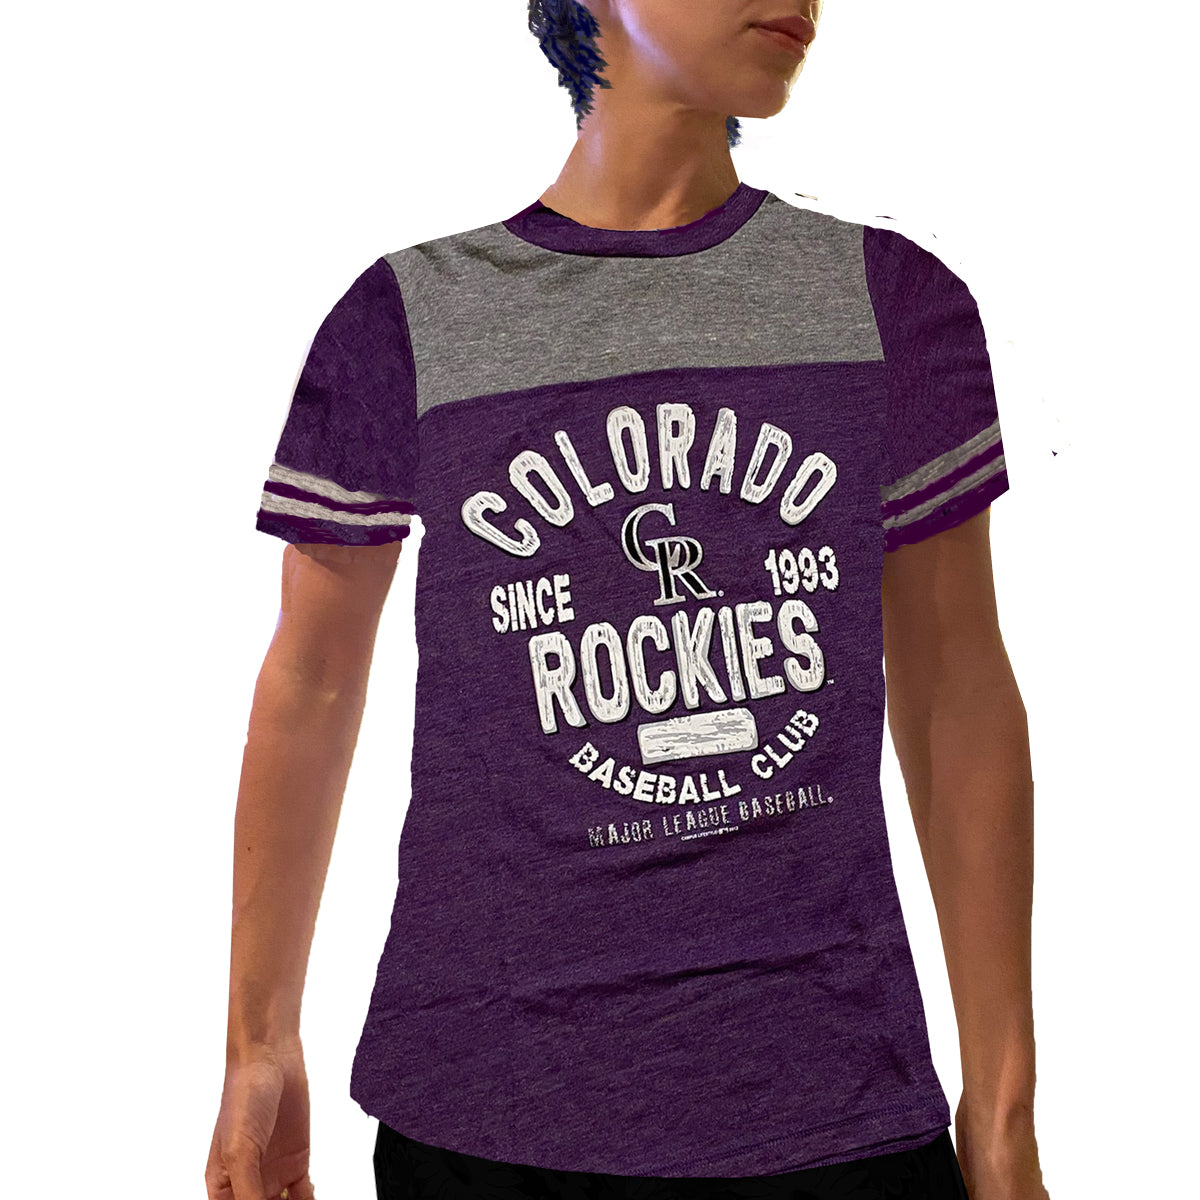 rockies baseball women's shirts